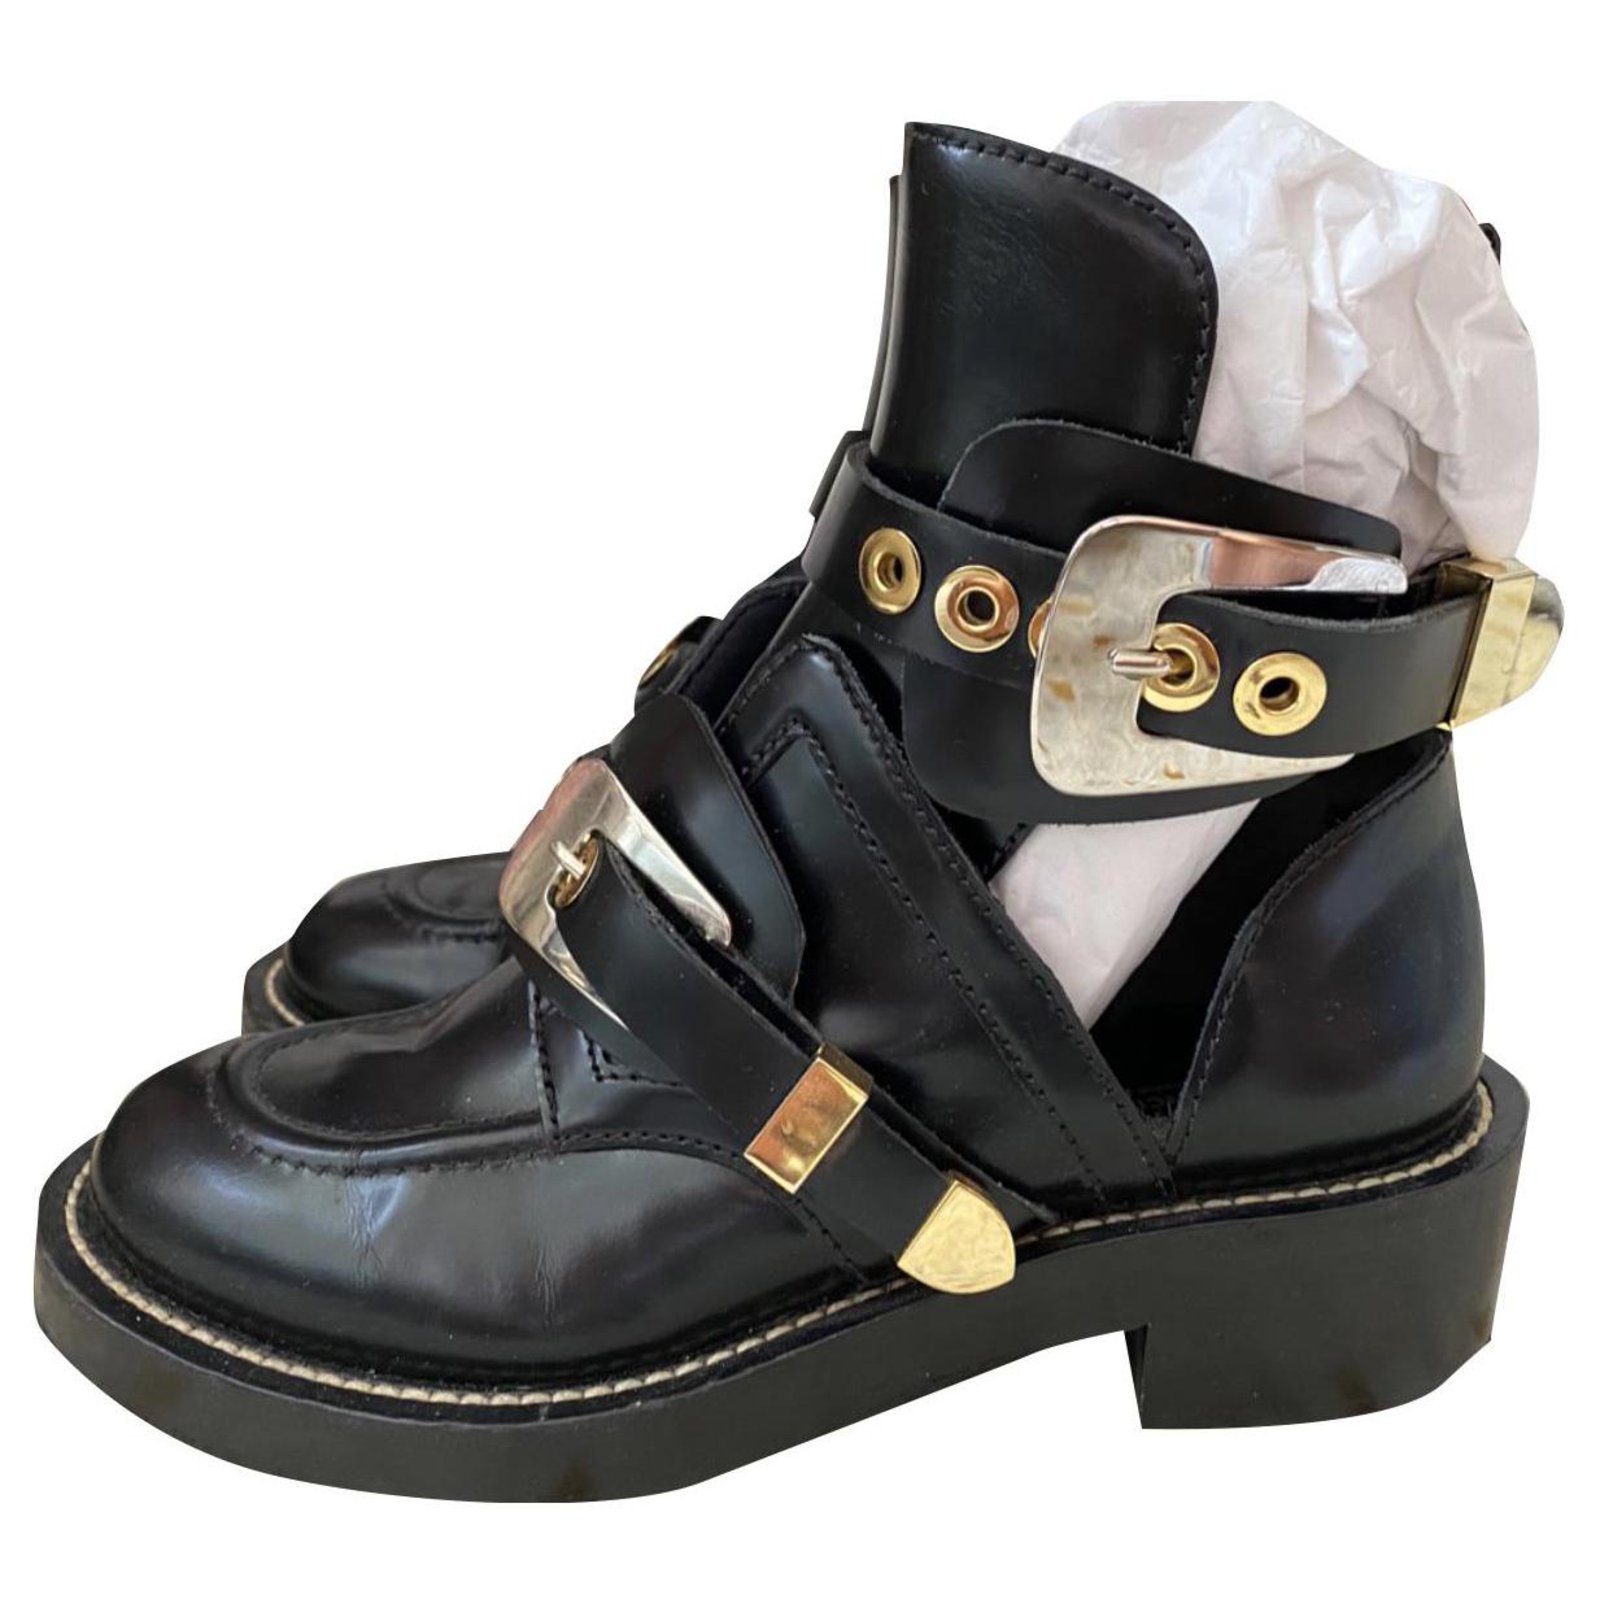 Leather boots Balenciaga Black size 41 EU in Leather - 36234497